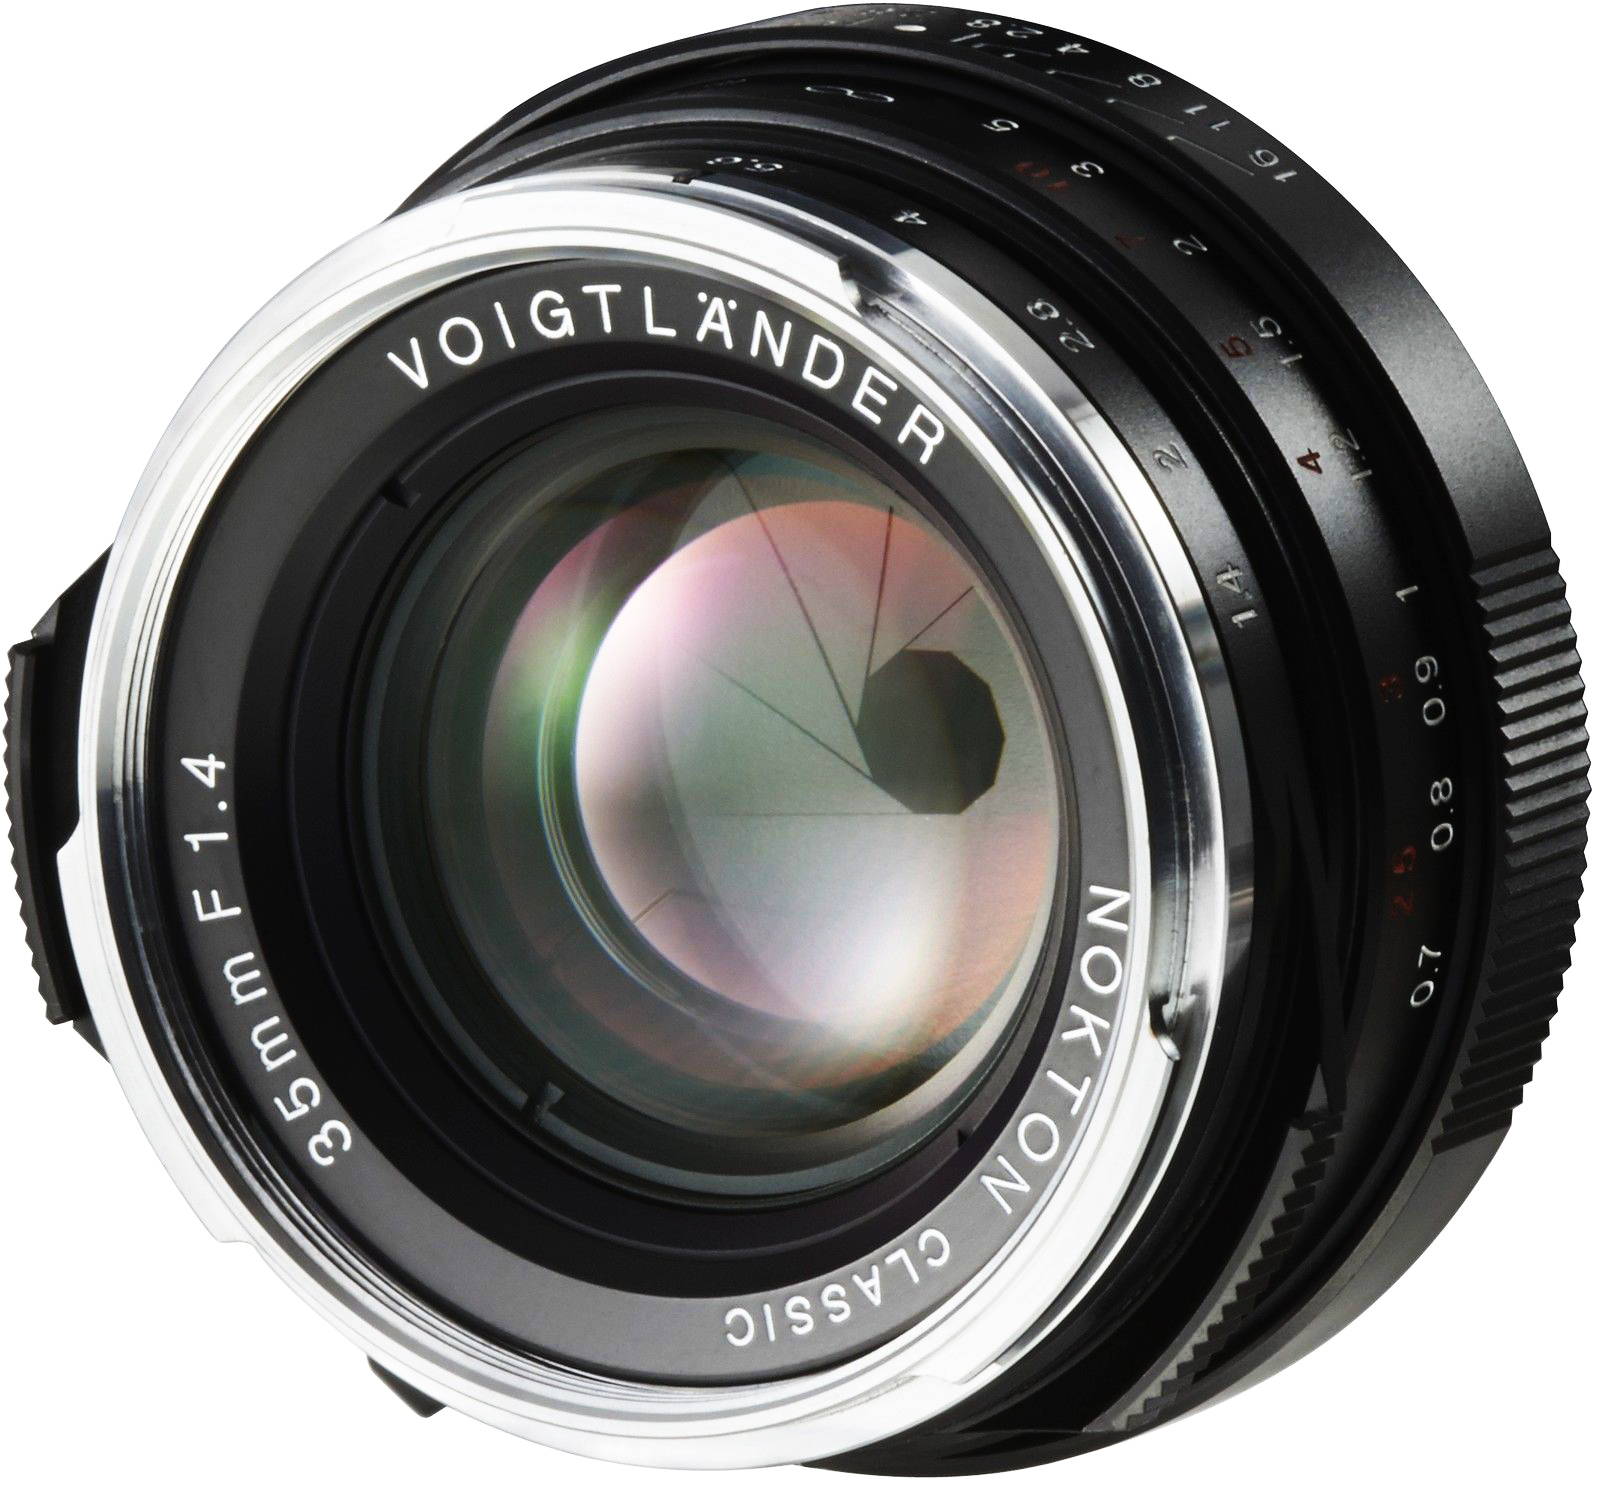 Voigtlander(フォクトレンダー)の単焦点レンズなど計9点を